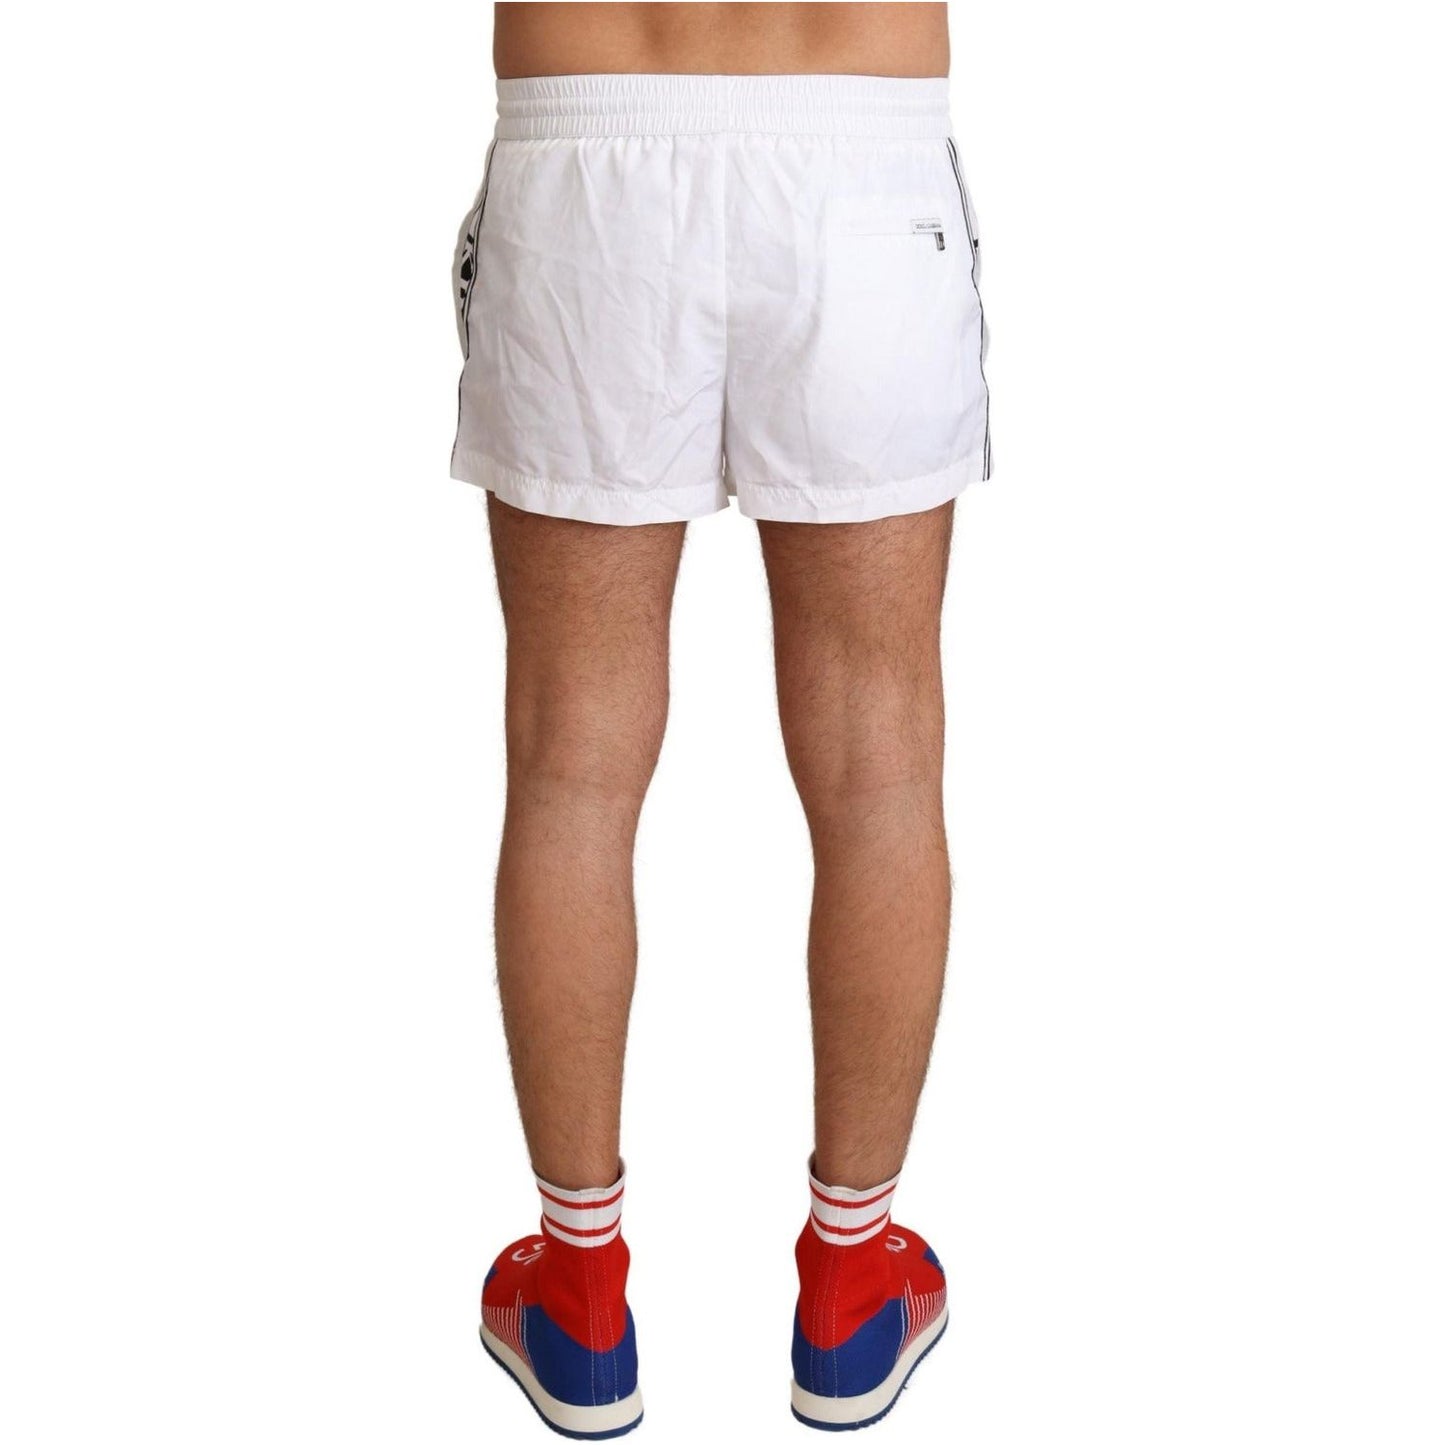 Dolce & Gabbana Elegant White KING Motive Swim Trunks white-king-mens-beachwear-swimwear-shorts IMG_2568-scaled-b6e9c24e-cc1.jpg